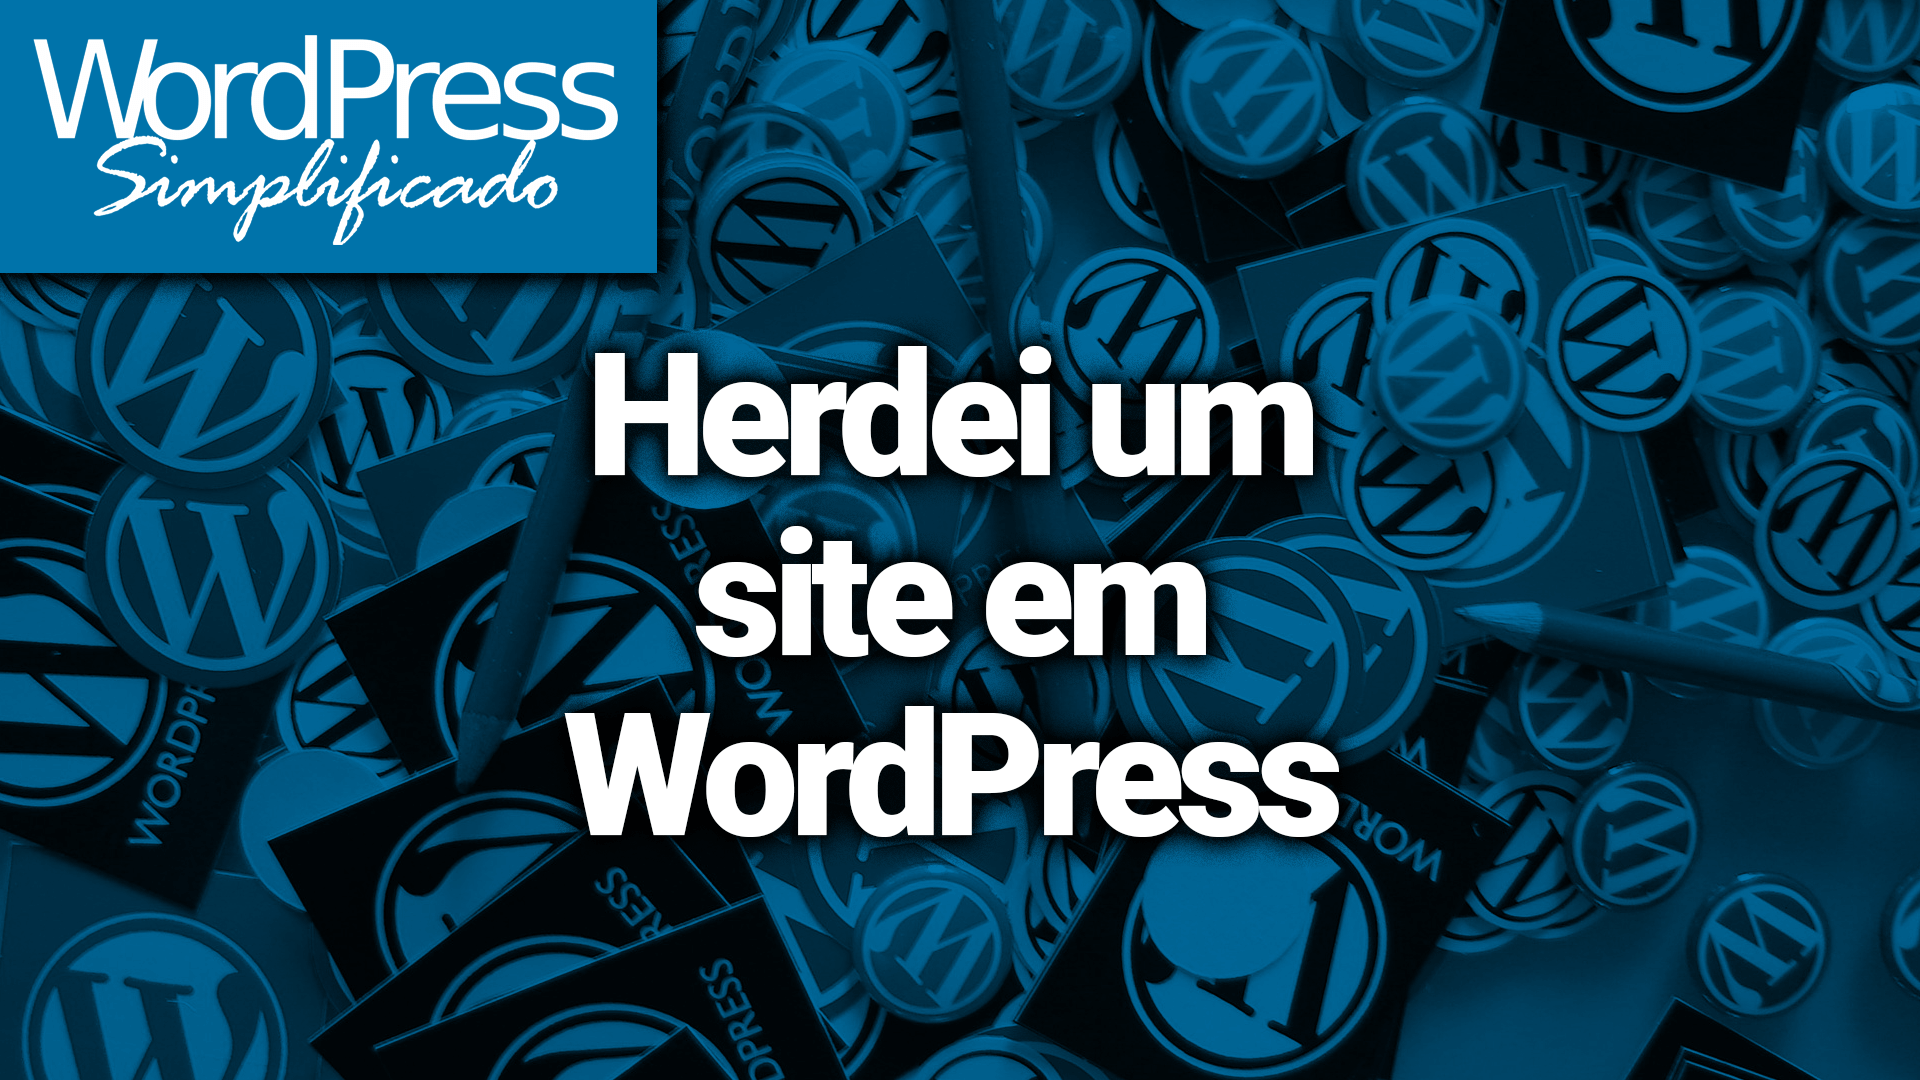 Herdei um site em WordPress